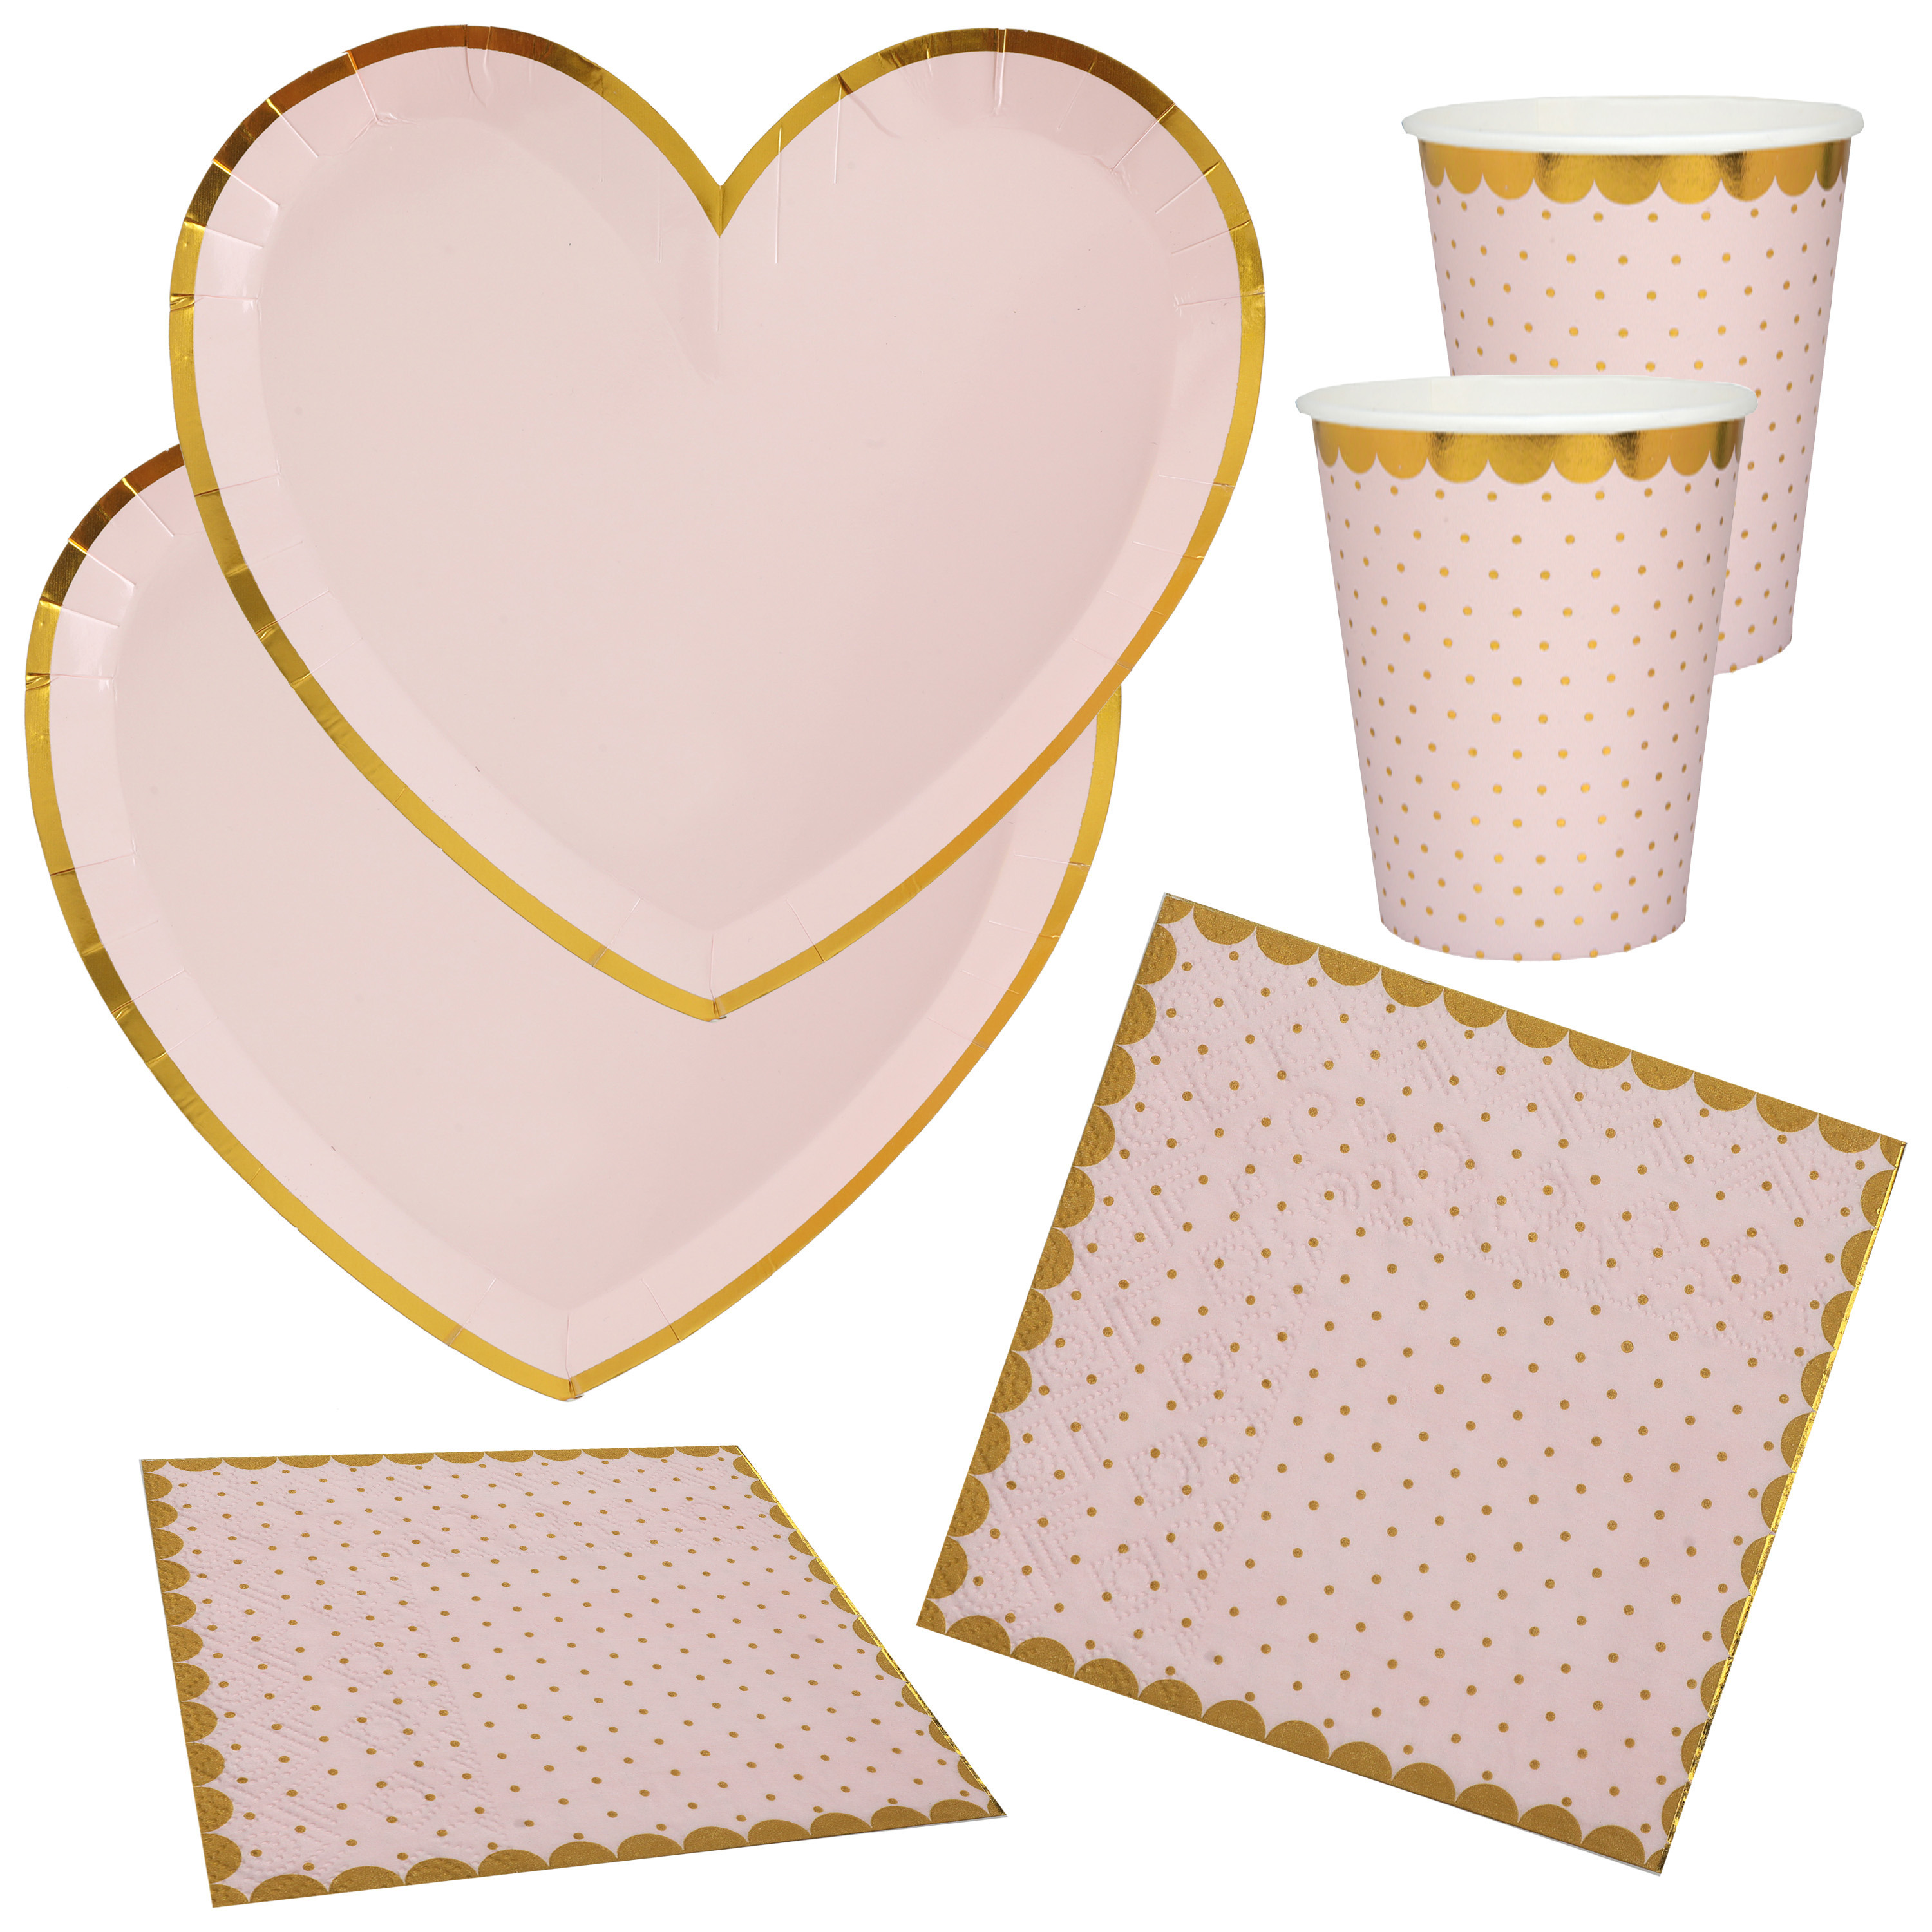 Feest wegwerp servies set hartje 10x bordjes-10x bekers-20x servetten roze-goud